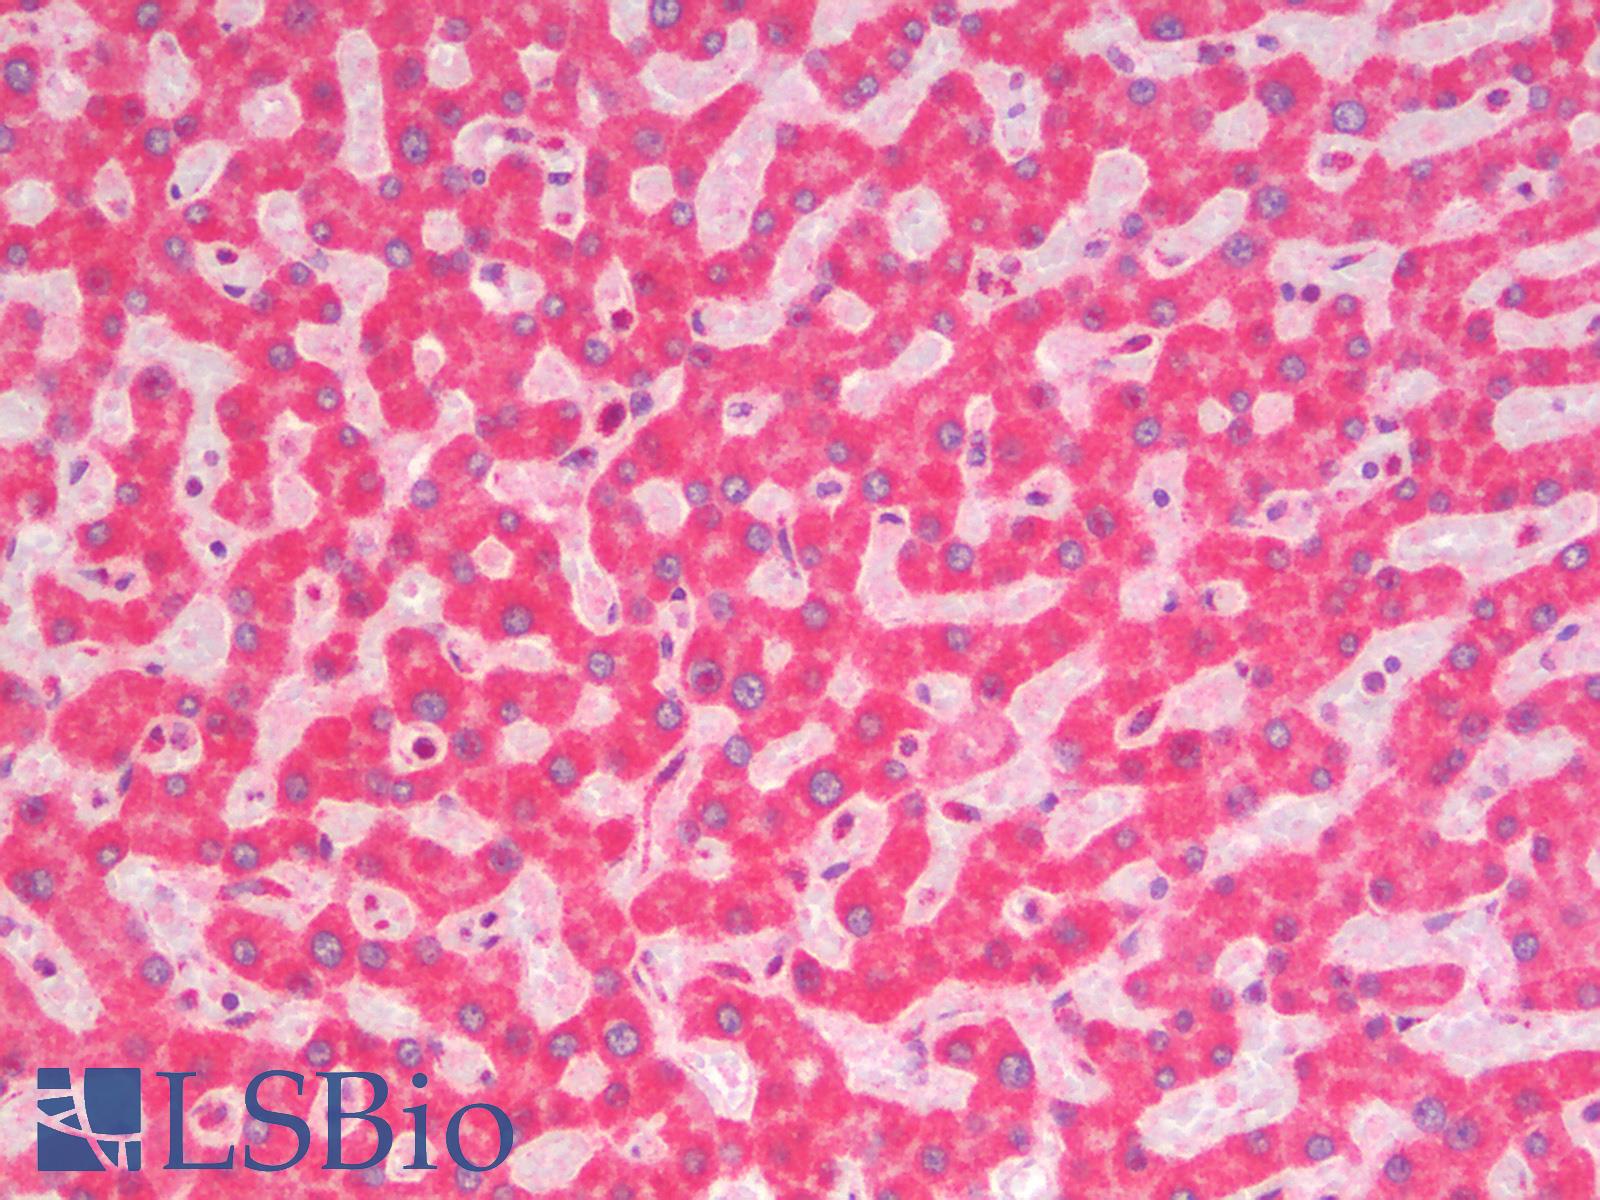 COX5B Antibody - Human Liver: Formalin-Fixed, Paraffin-Embedded (FFPE)